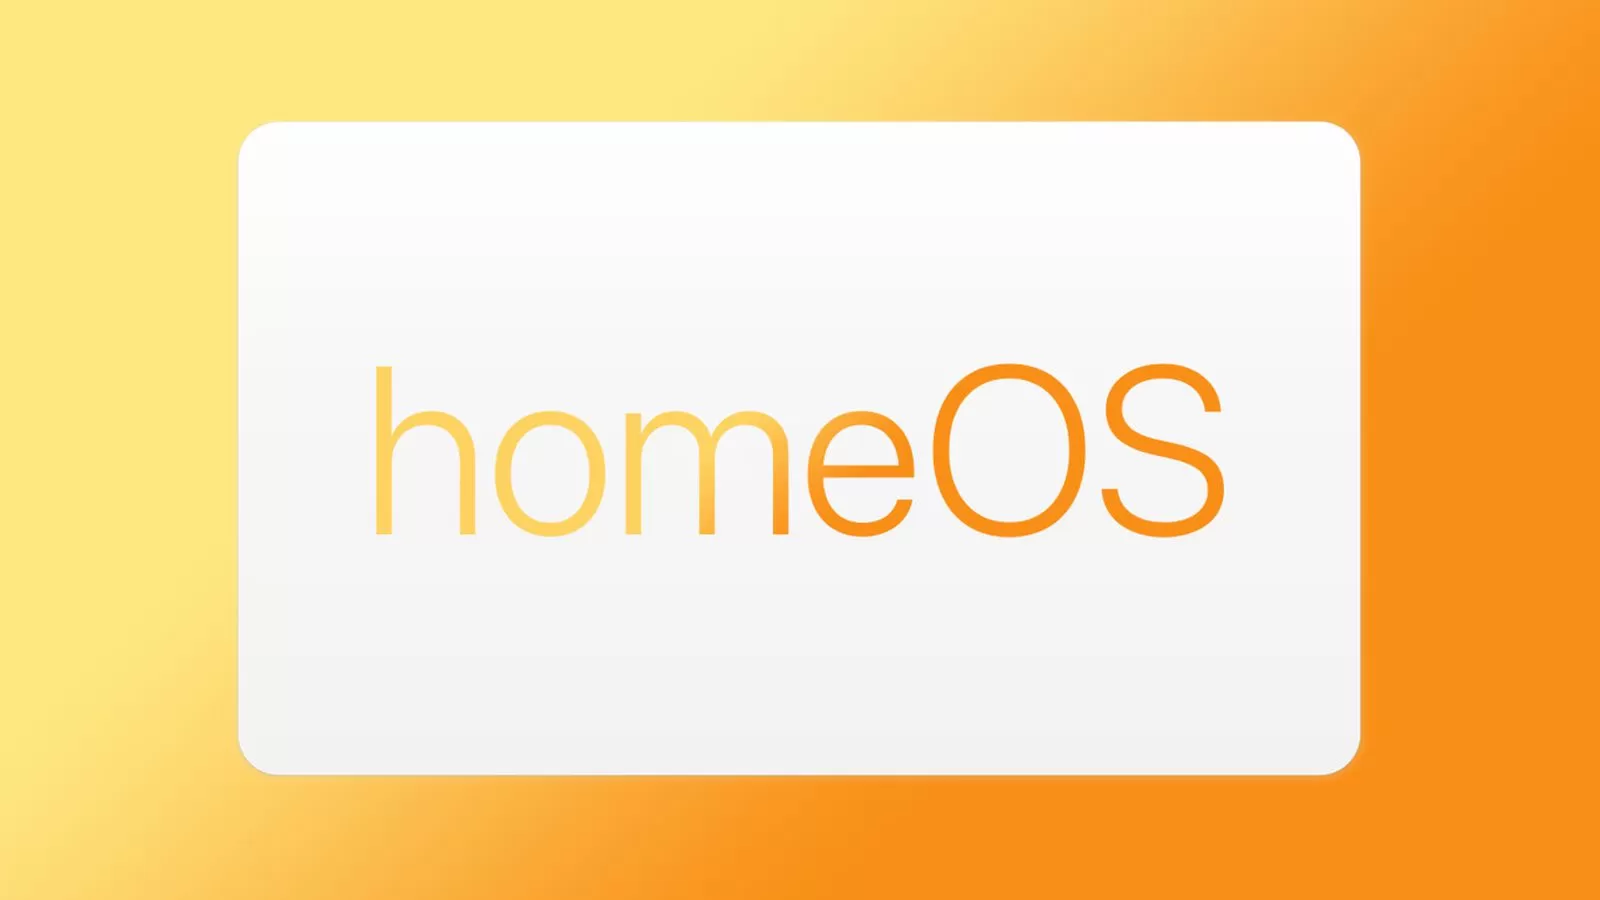 homeOS2 | apple | Xiaomi หมายเลข 2? พบ Apple รับสมัครพนักงานฝ่าย homeOS อีกครั้ง